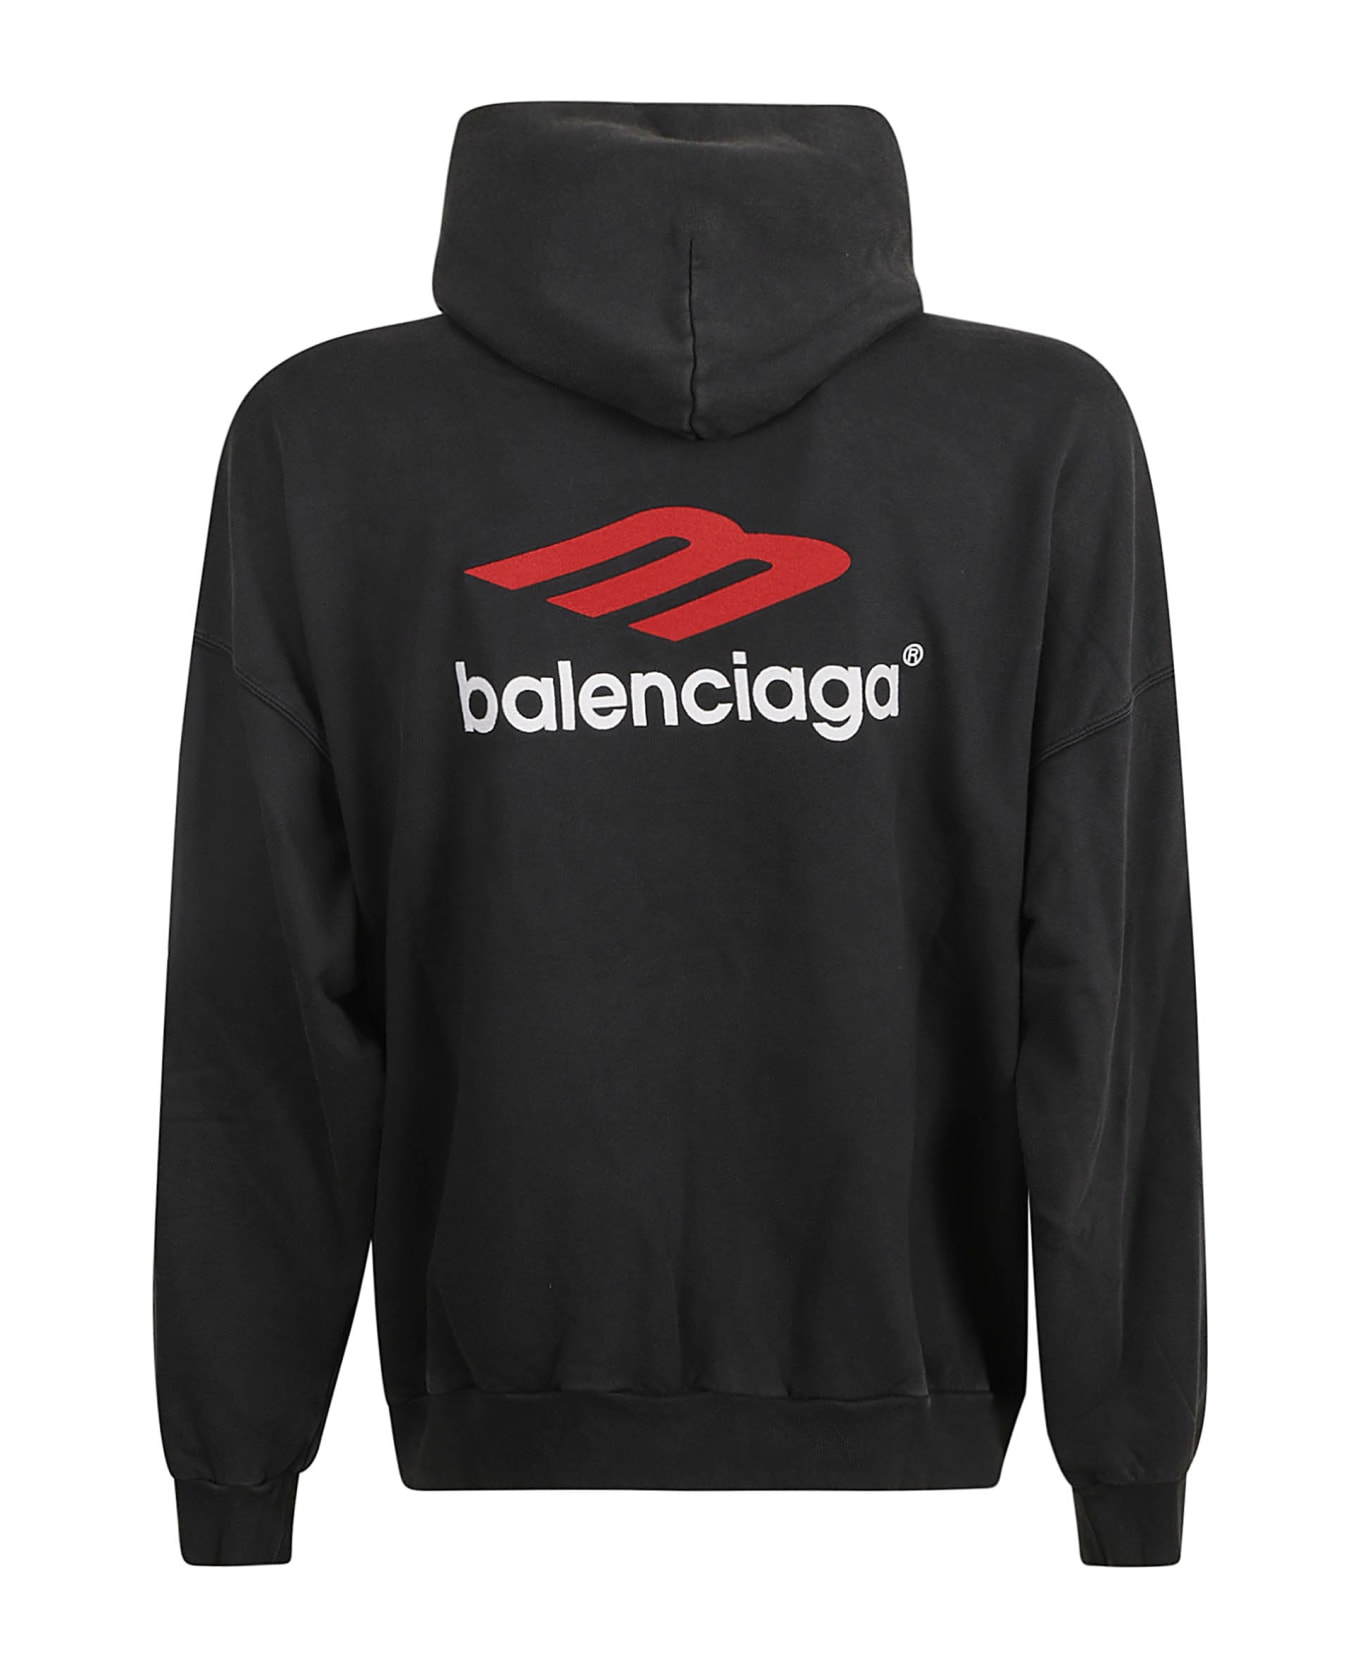 Balenciaga 3b Icon Embroidered Hoodie - Fade Black/red/white